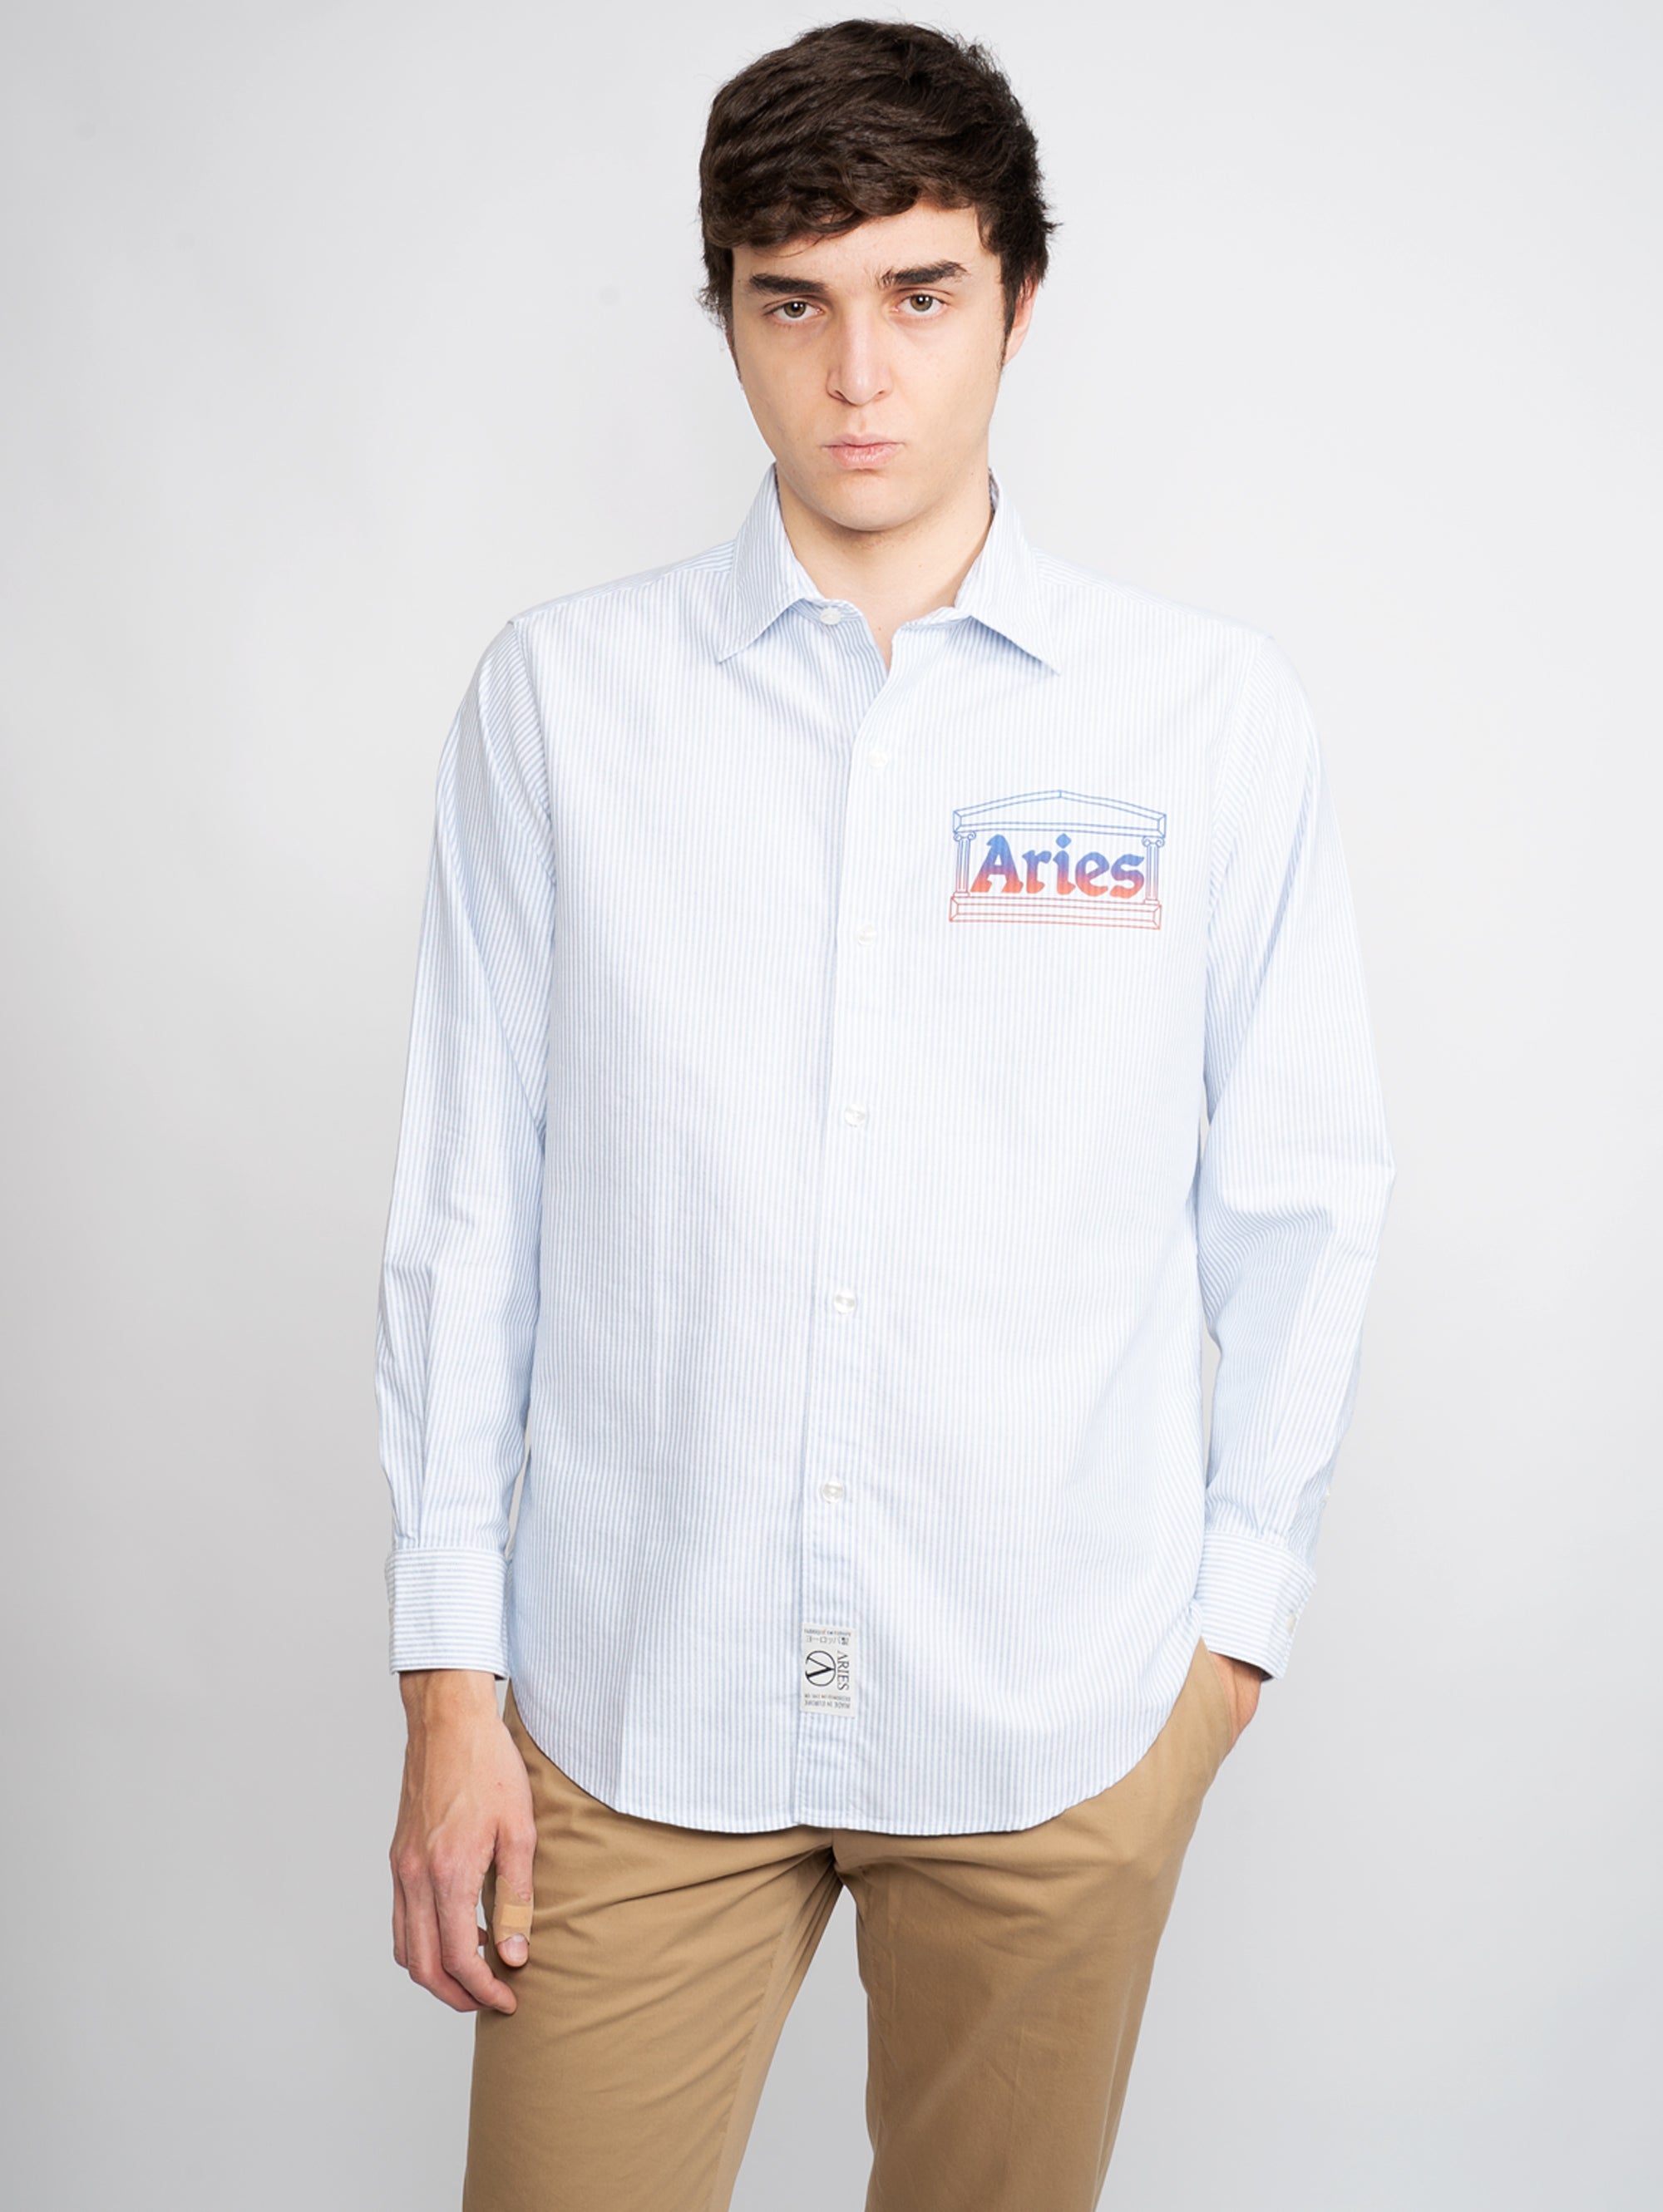 ARIES-Camicia a Righe in Oxford Bianco/Blu-TRYME Shop